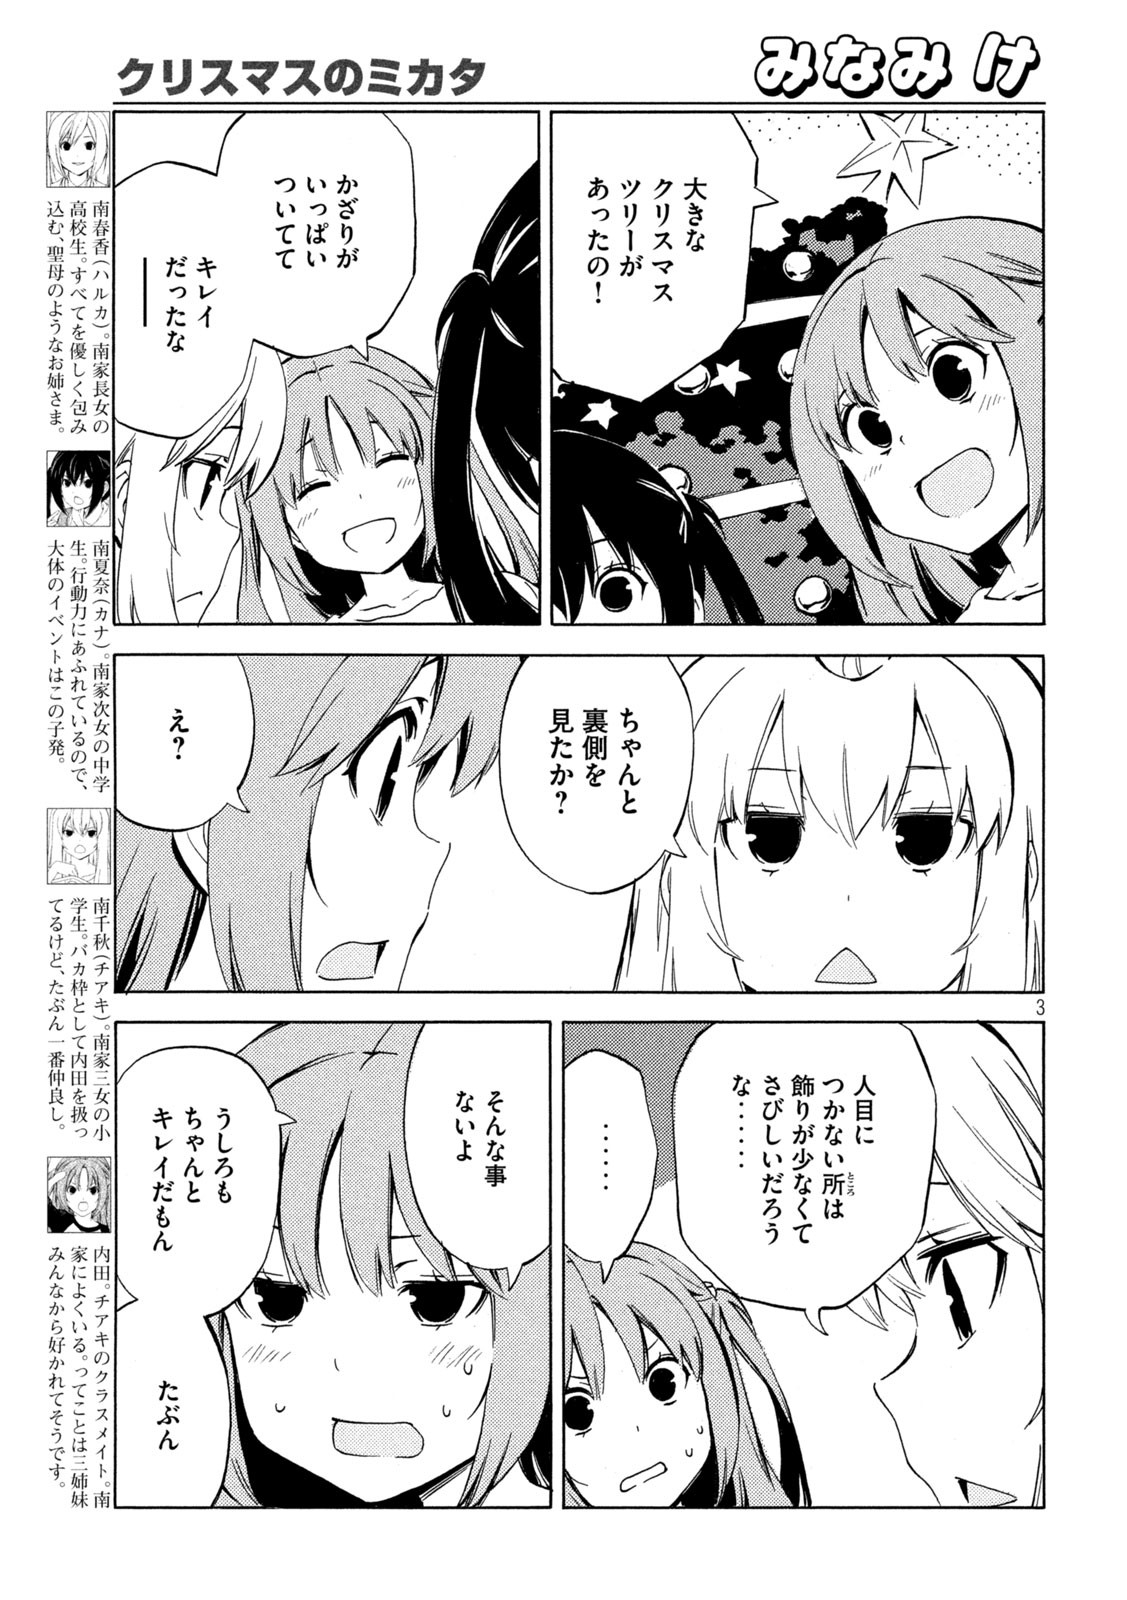 Minami-ke - Chapter 475 - Page 3